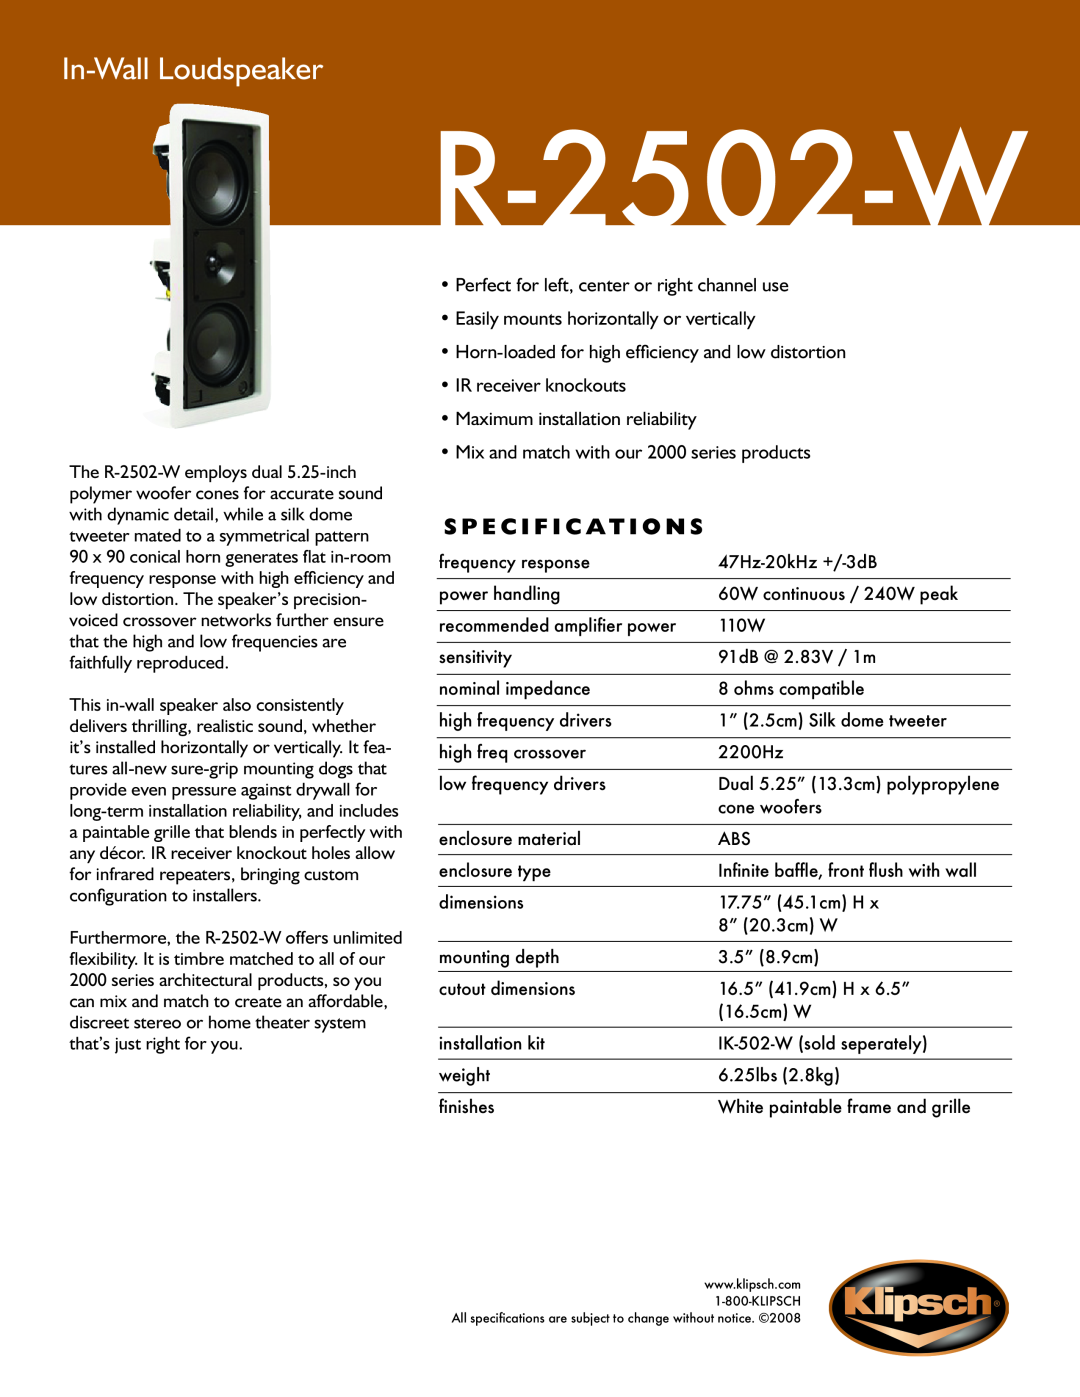 Klipsch R-2502-W specifications In-WallLoudspeaker, S p e c i f i c a t i o n s 